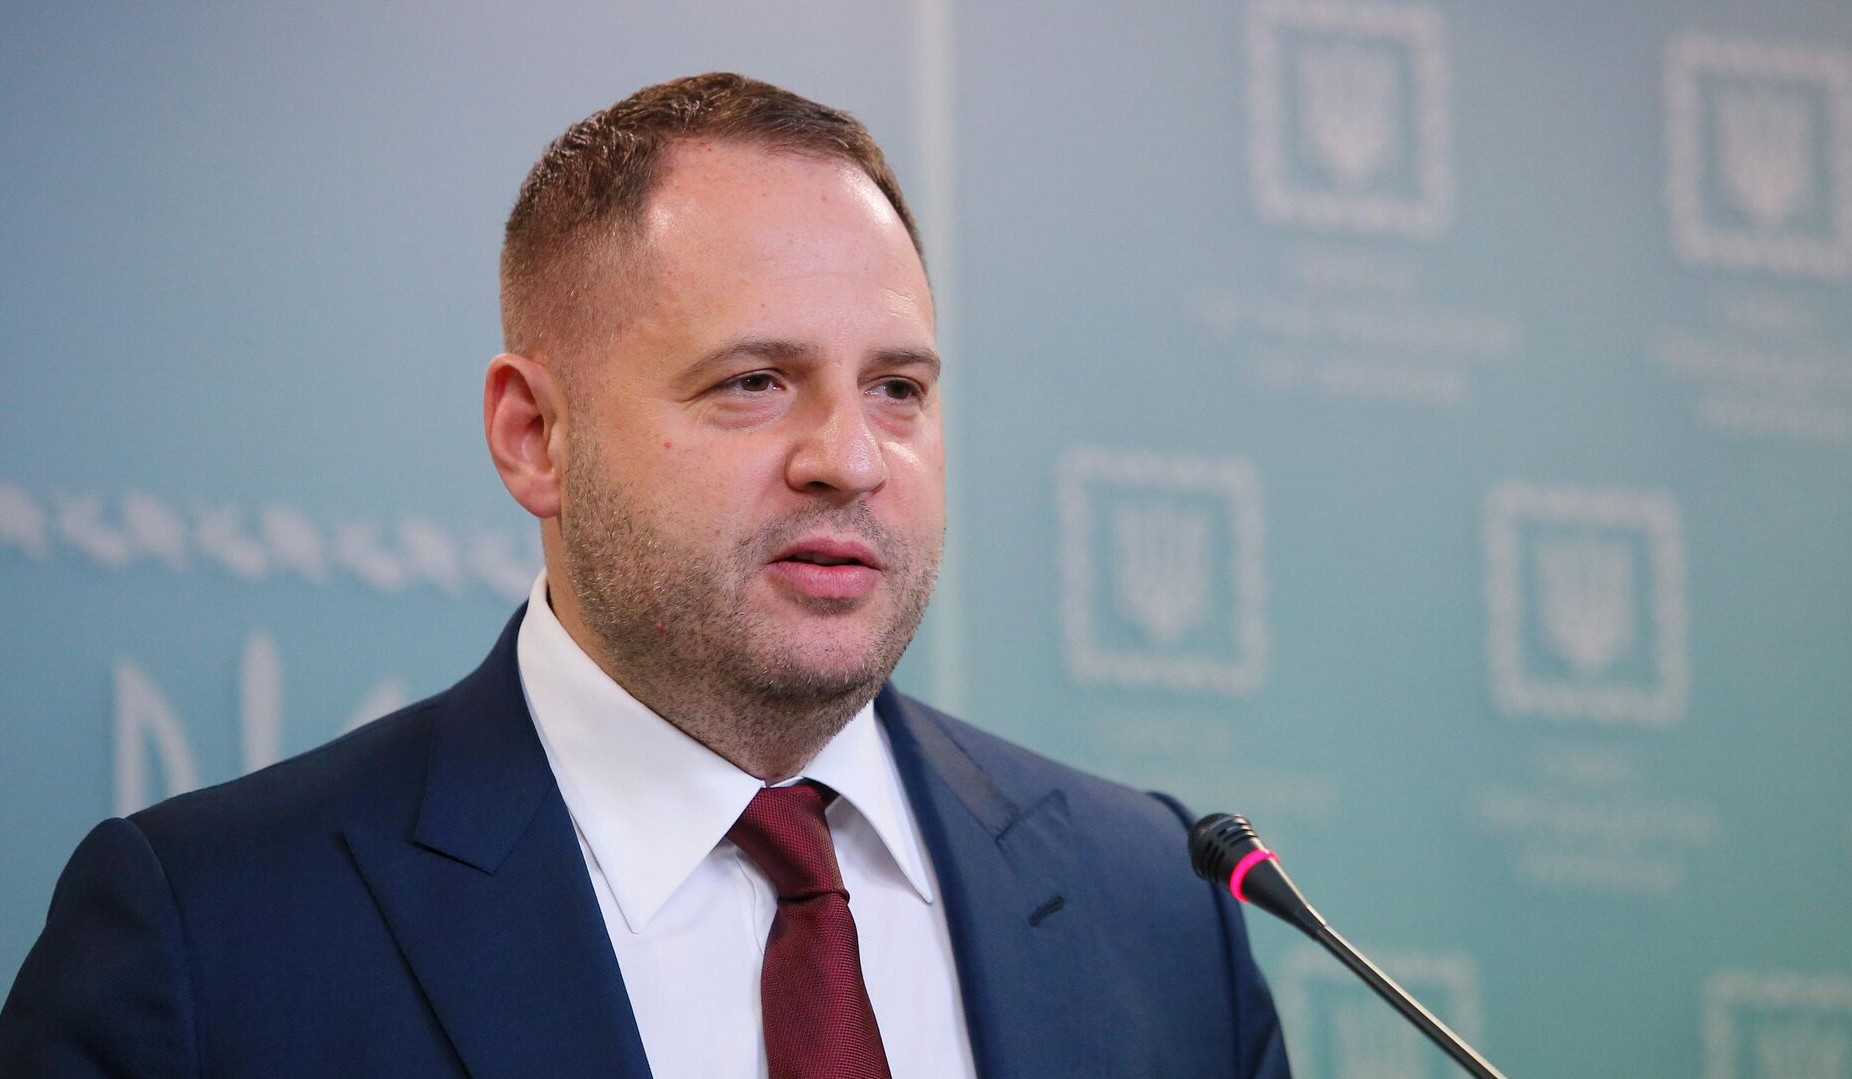 Yermak addressed criticism of Ukraine's counterattack